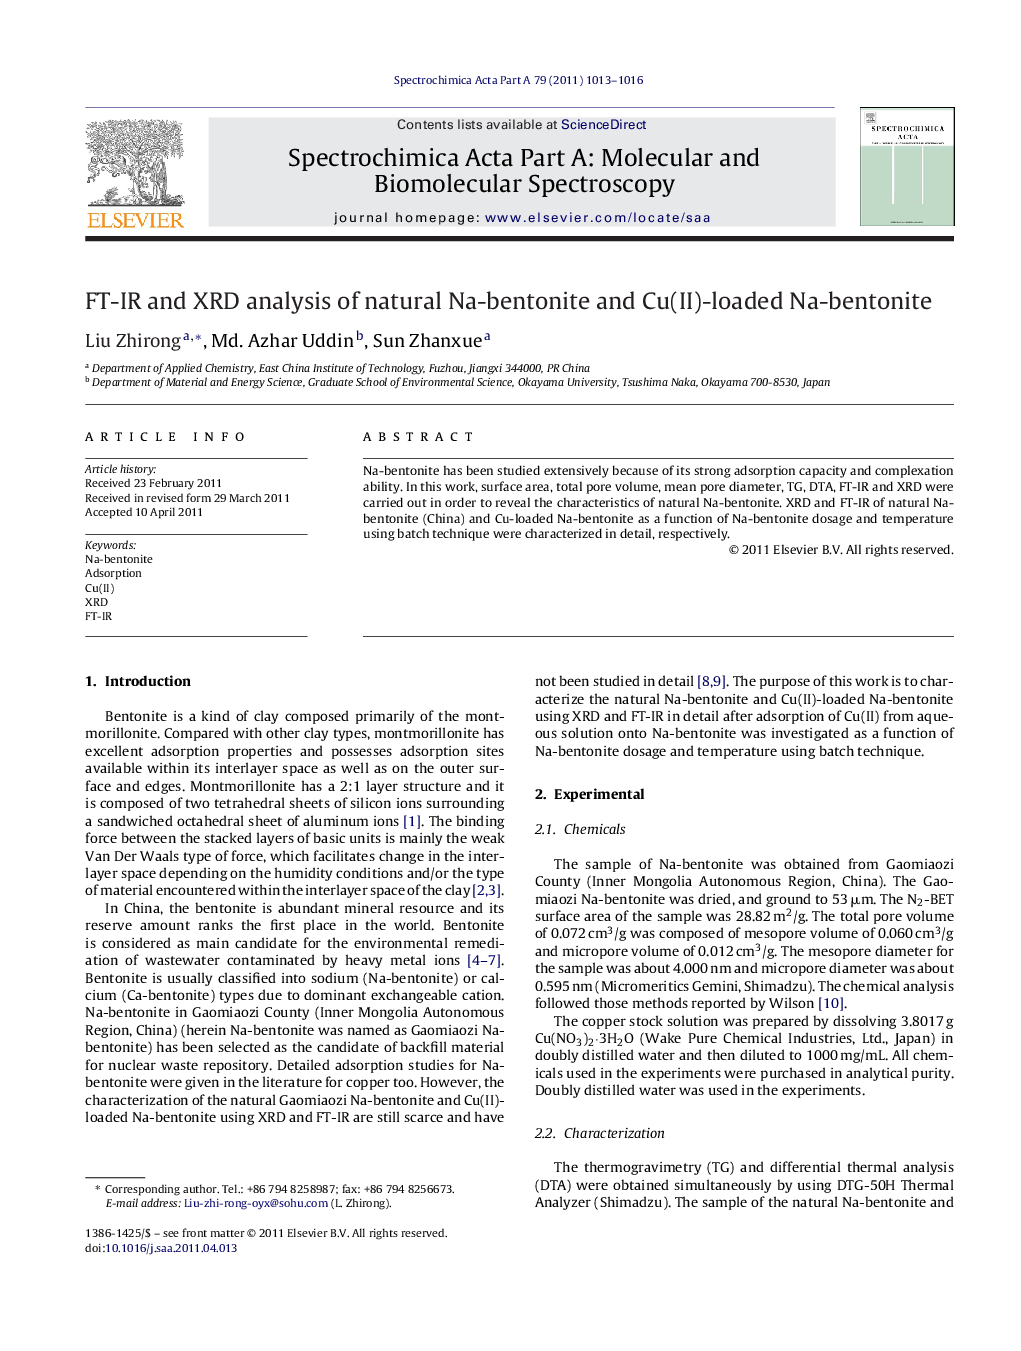 FT-IR and XRD analysis of natural Na-bentonite and Cu(II)-loaded Na-bentonite